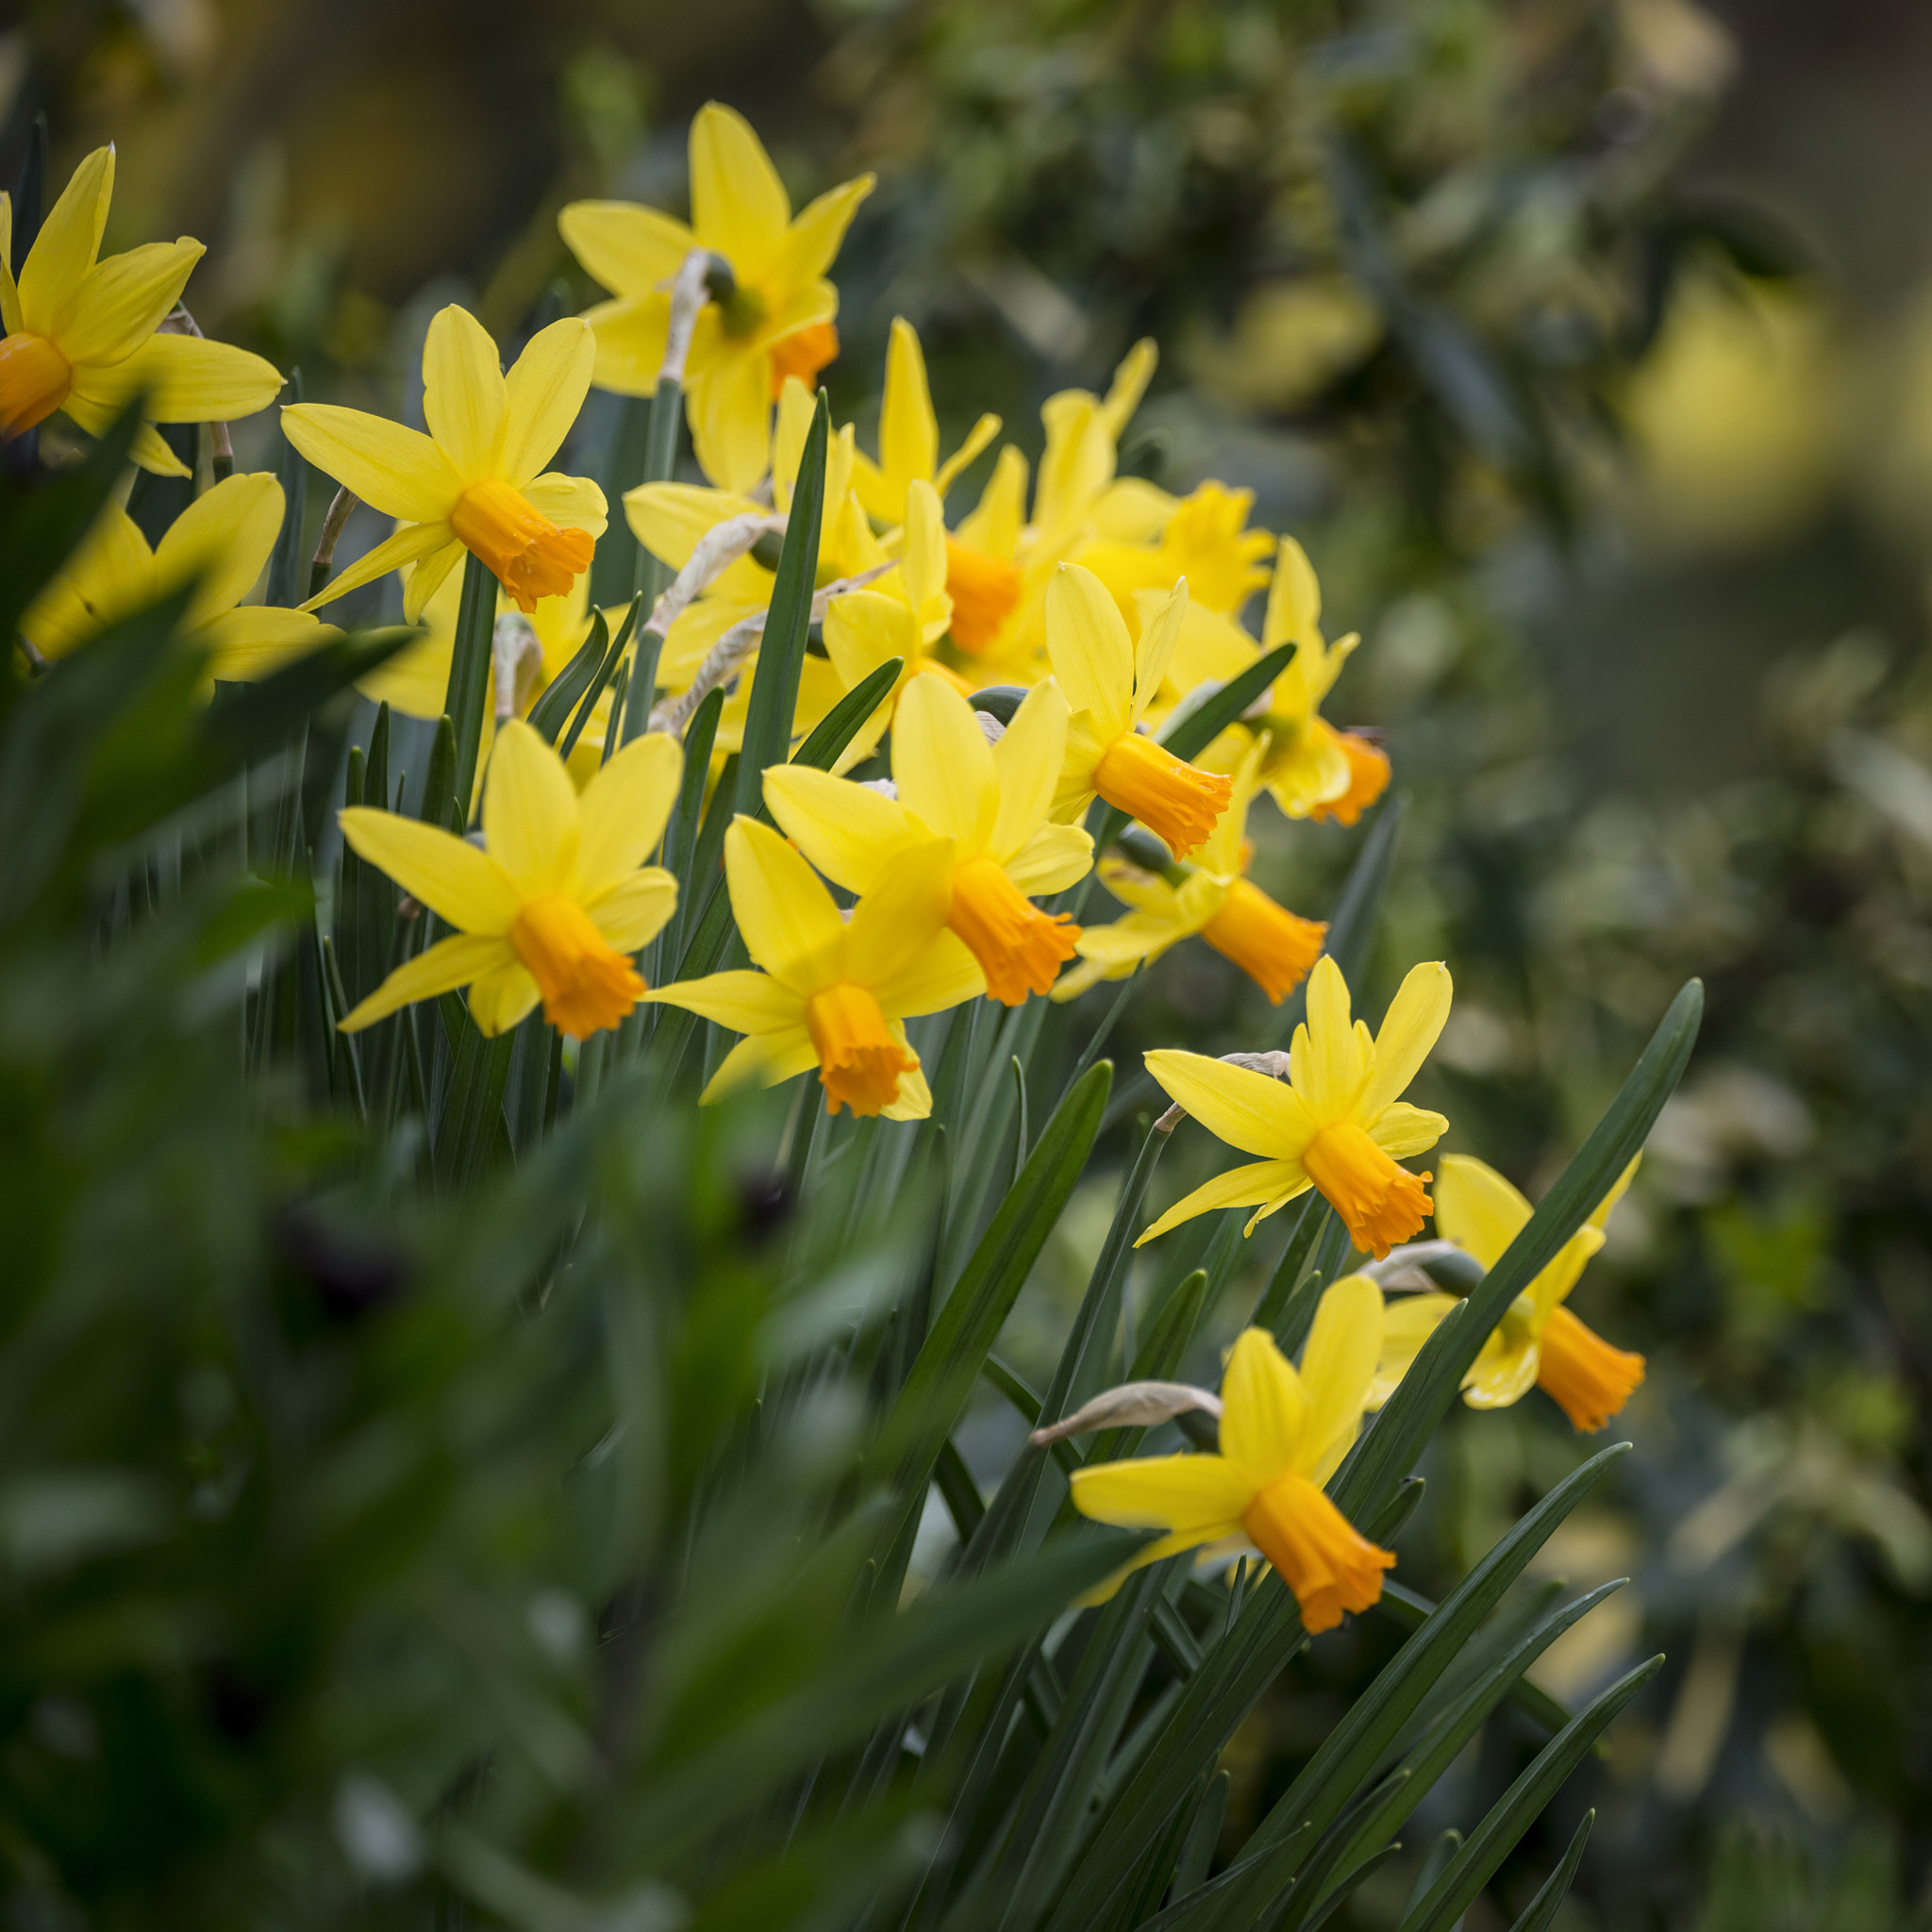 Nikon D800 + Sigma 150-600mm F5-6.3 DG OS HSM | C sample photo. Stunning shallow depth of field image of vibrant yellow daffodil photography